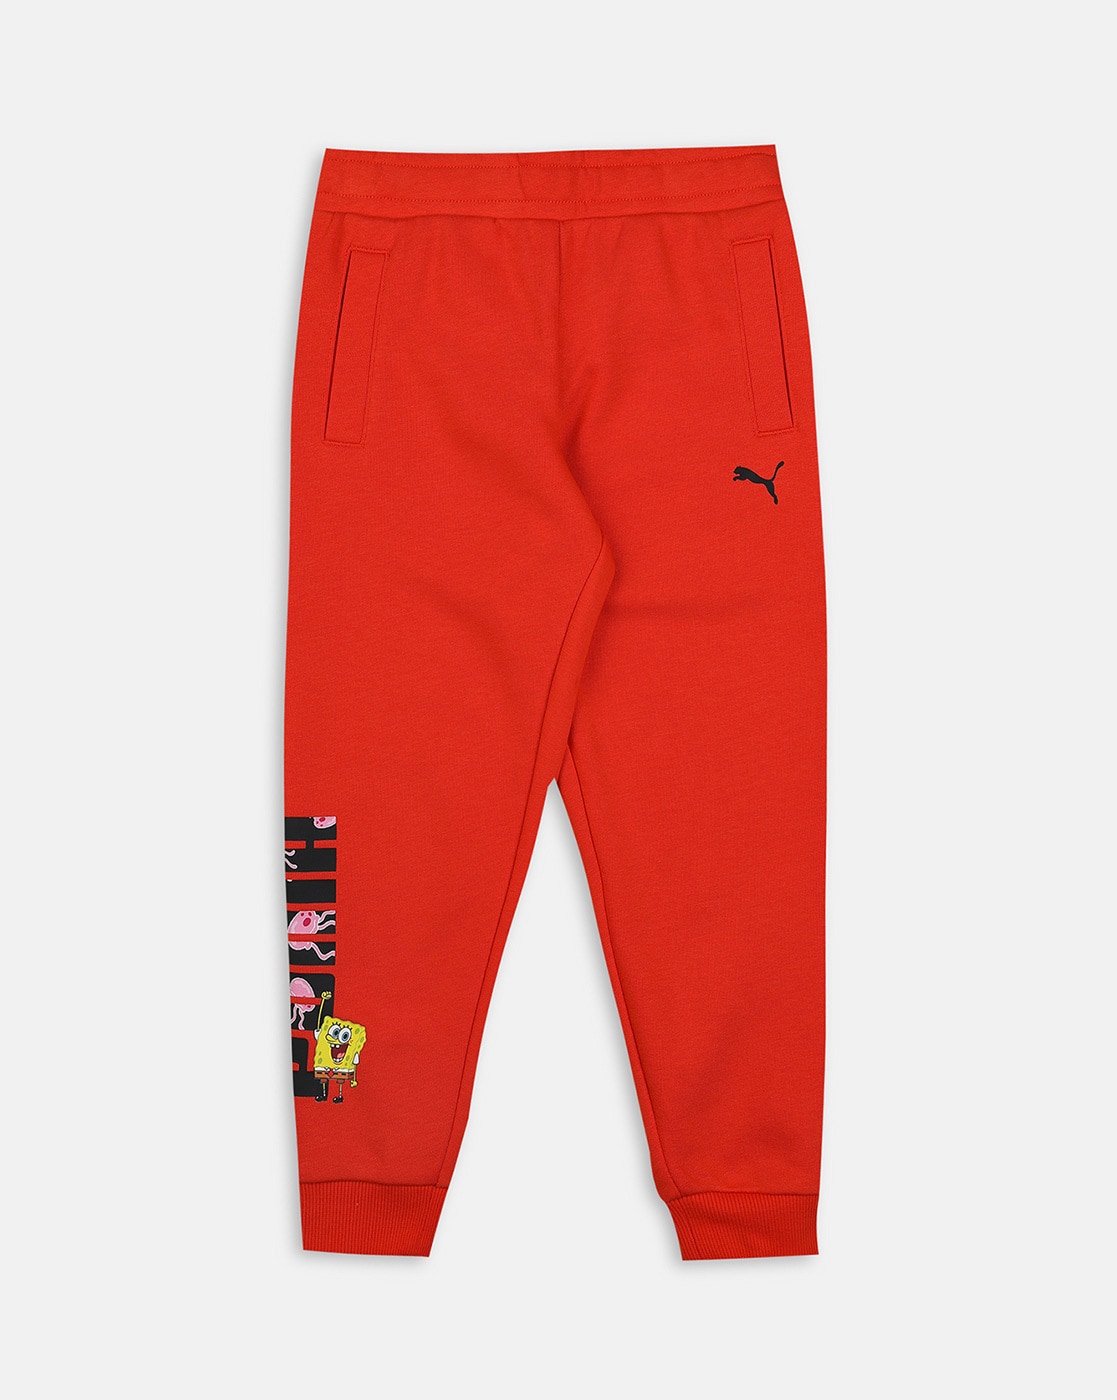 Buy UCB Kids Red Cotton Track Pants for Boys Clothing Online @ Tata CLiQ